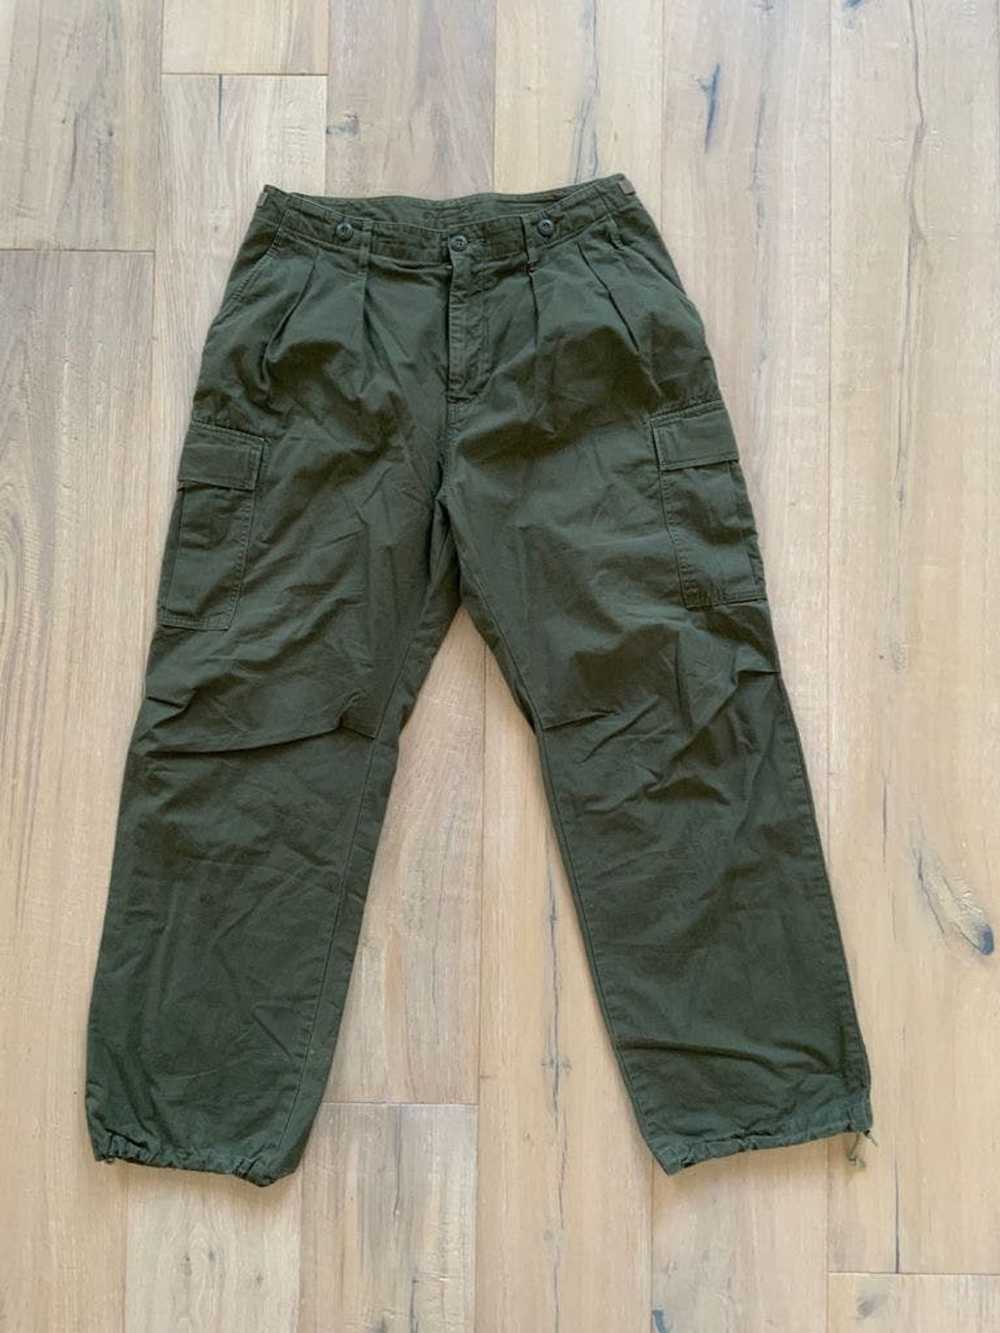 John Bull Military pants - image 1